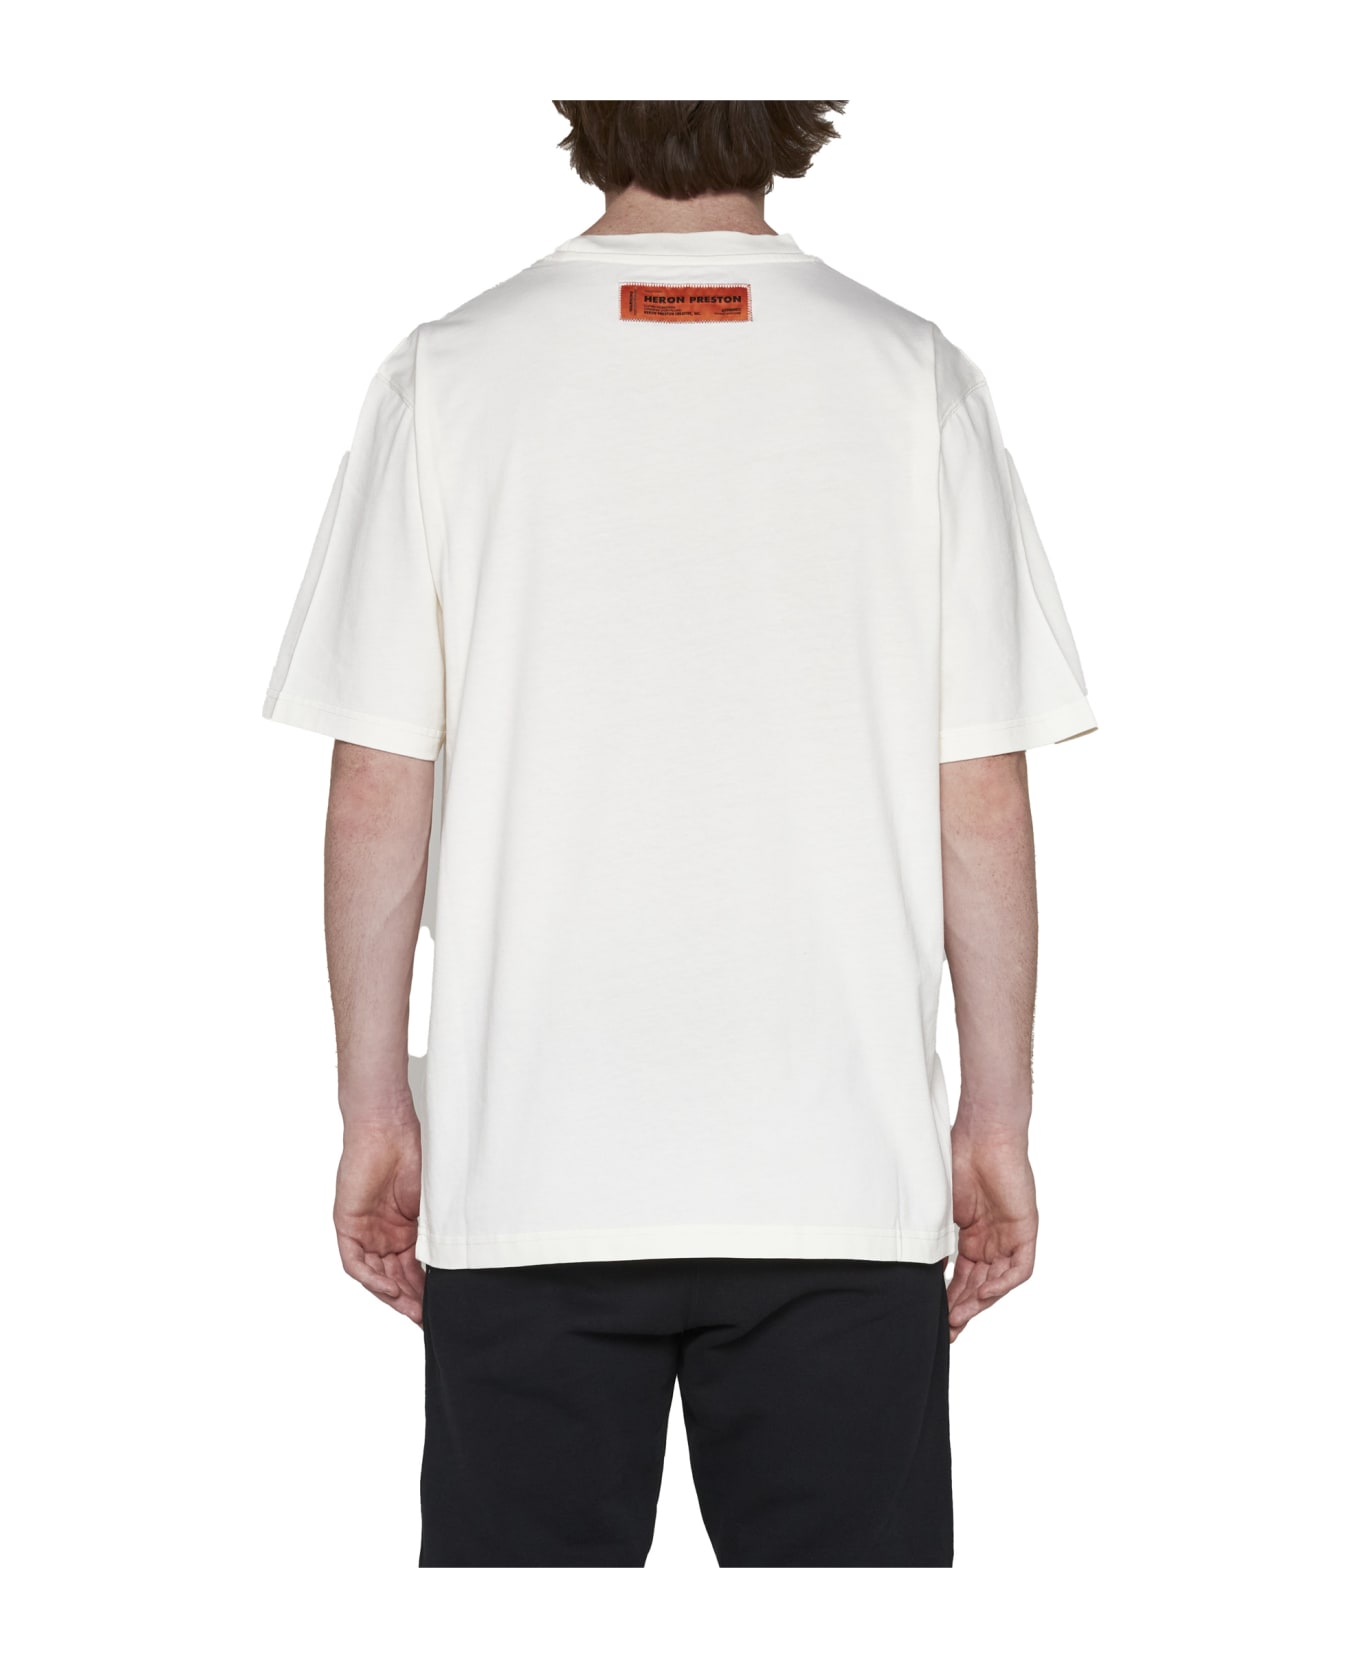 HERON PRESTON Hpny Embroidered T-shirt - White/black シャツ